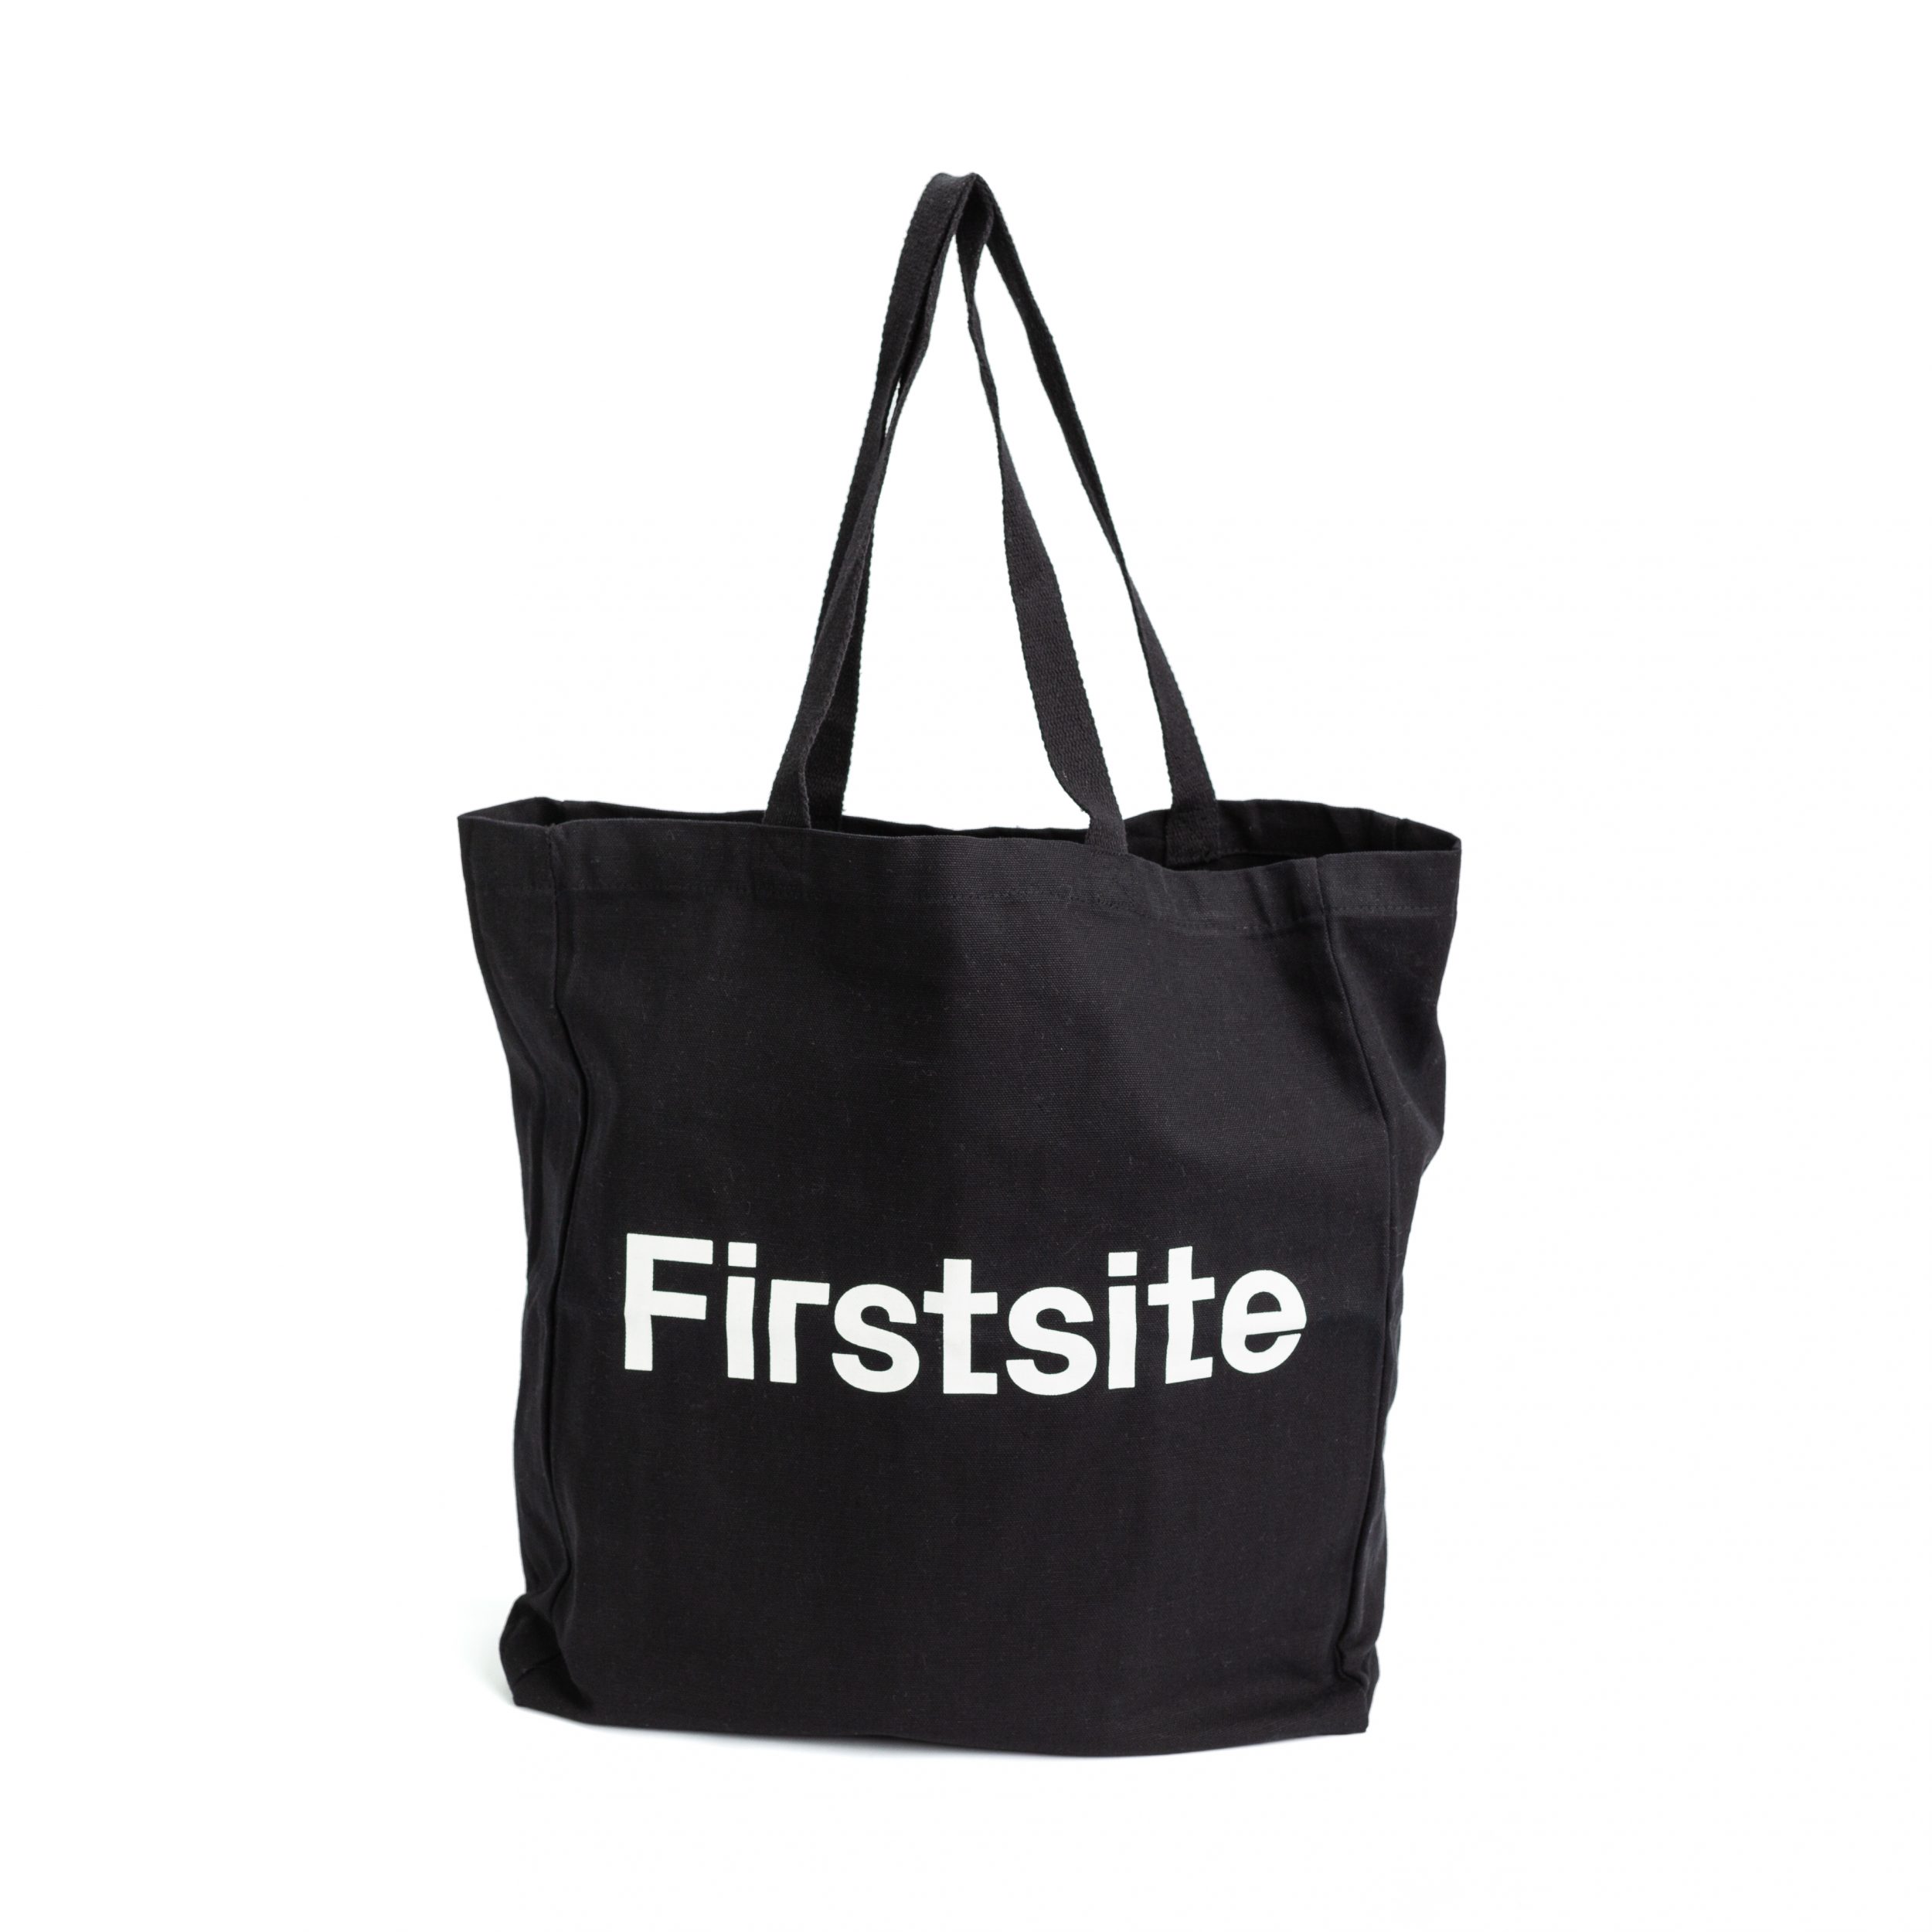 Firstsite Black Cotton Tote Bag - Firstsite